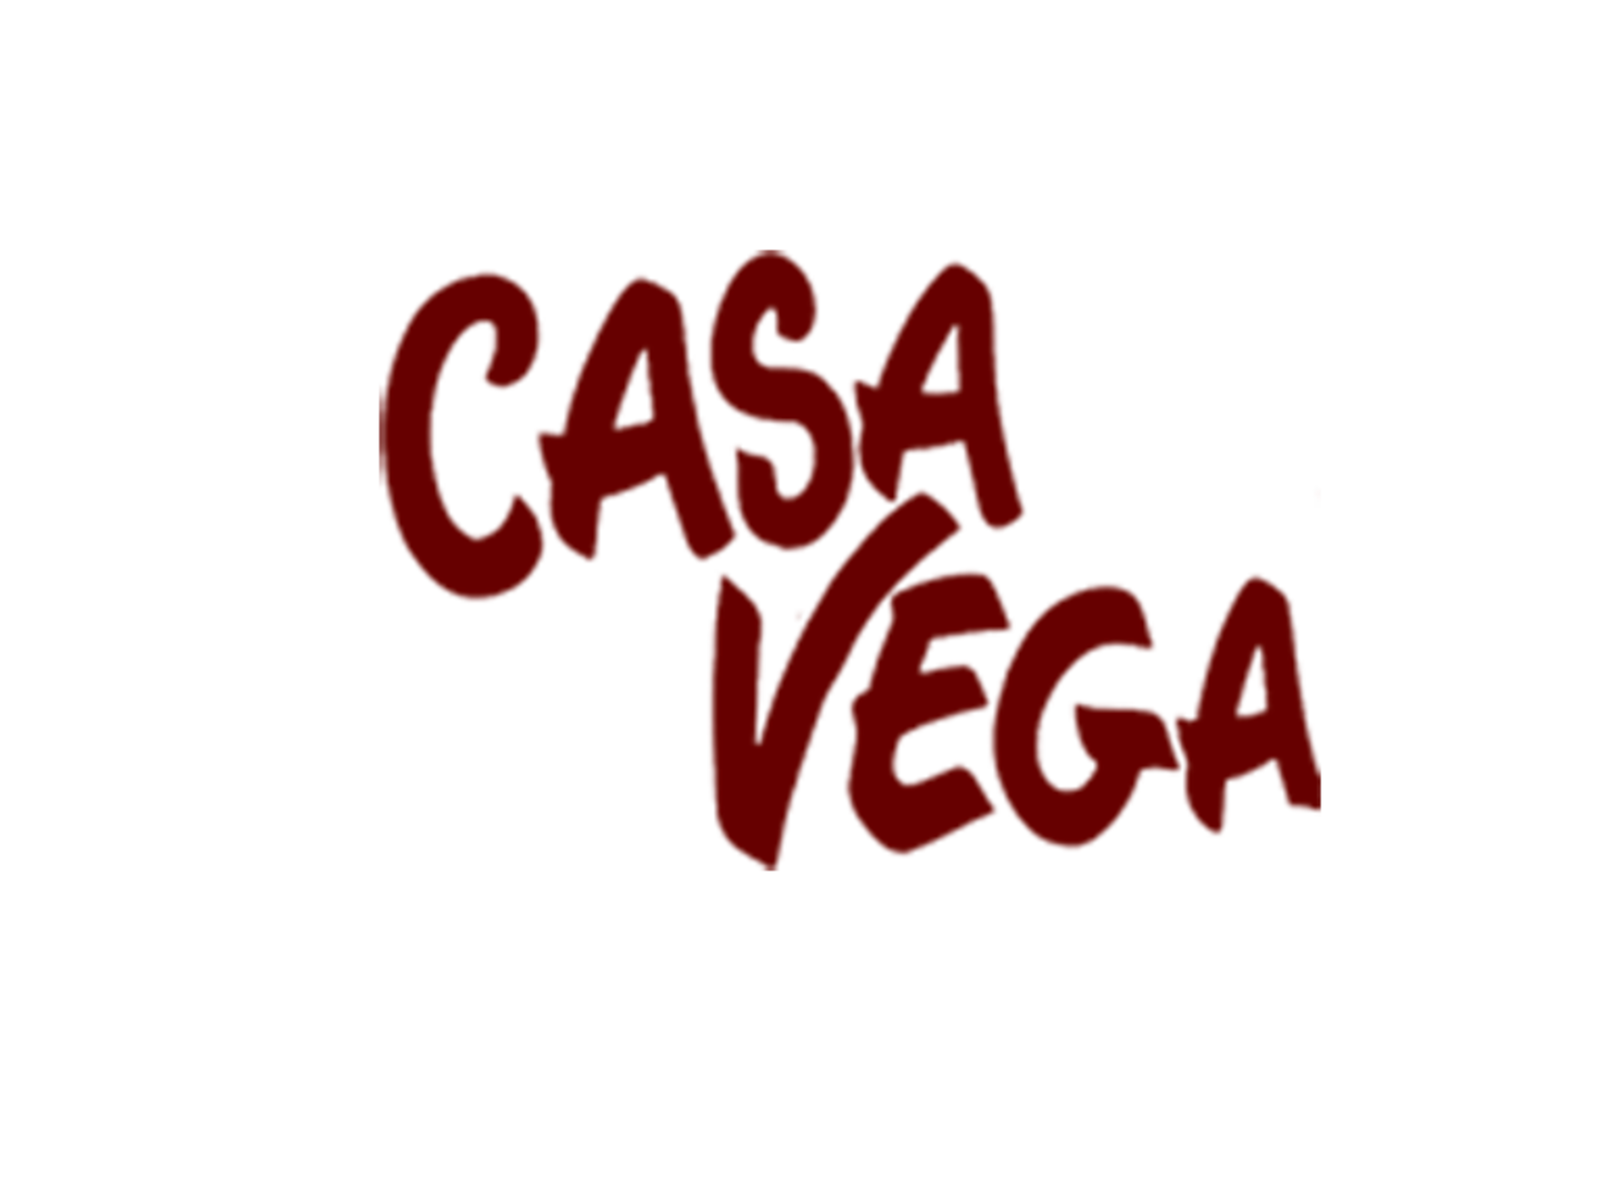 Casa Vega